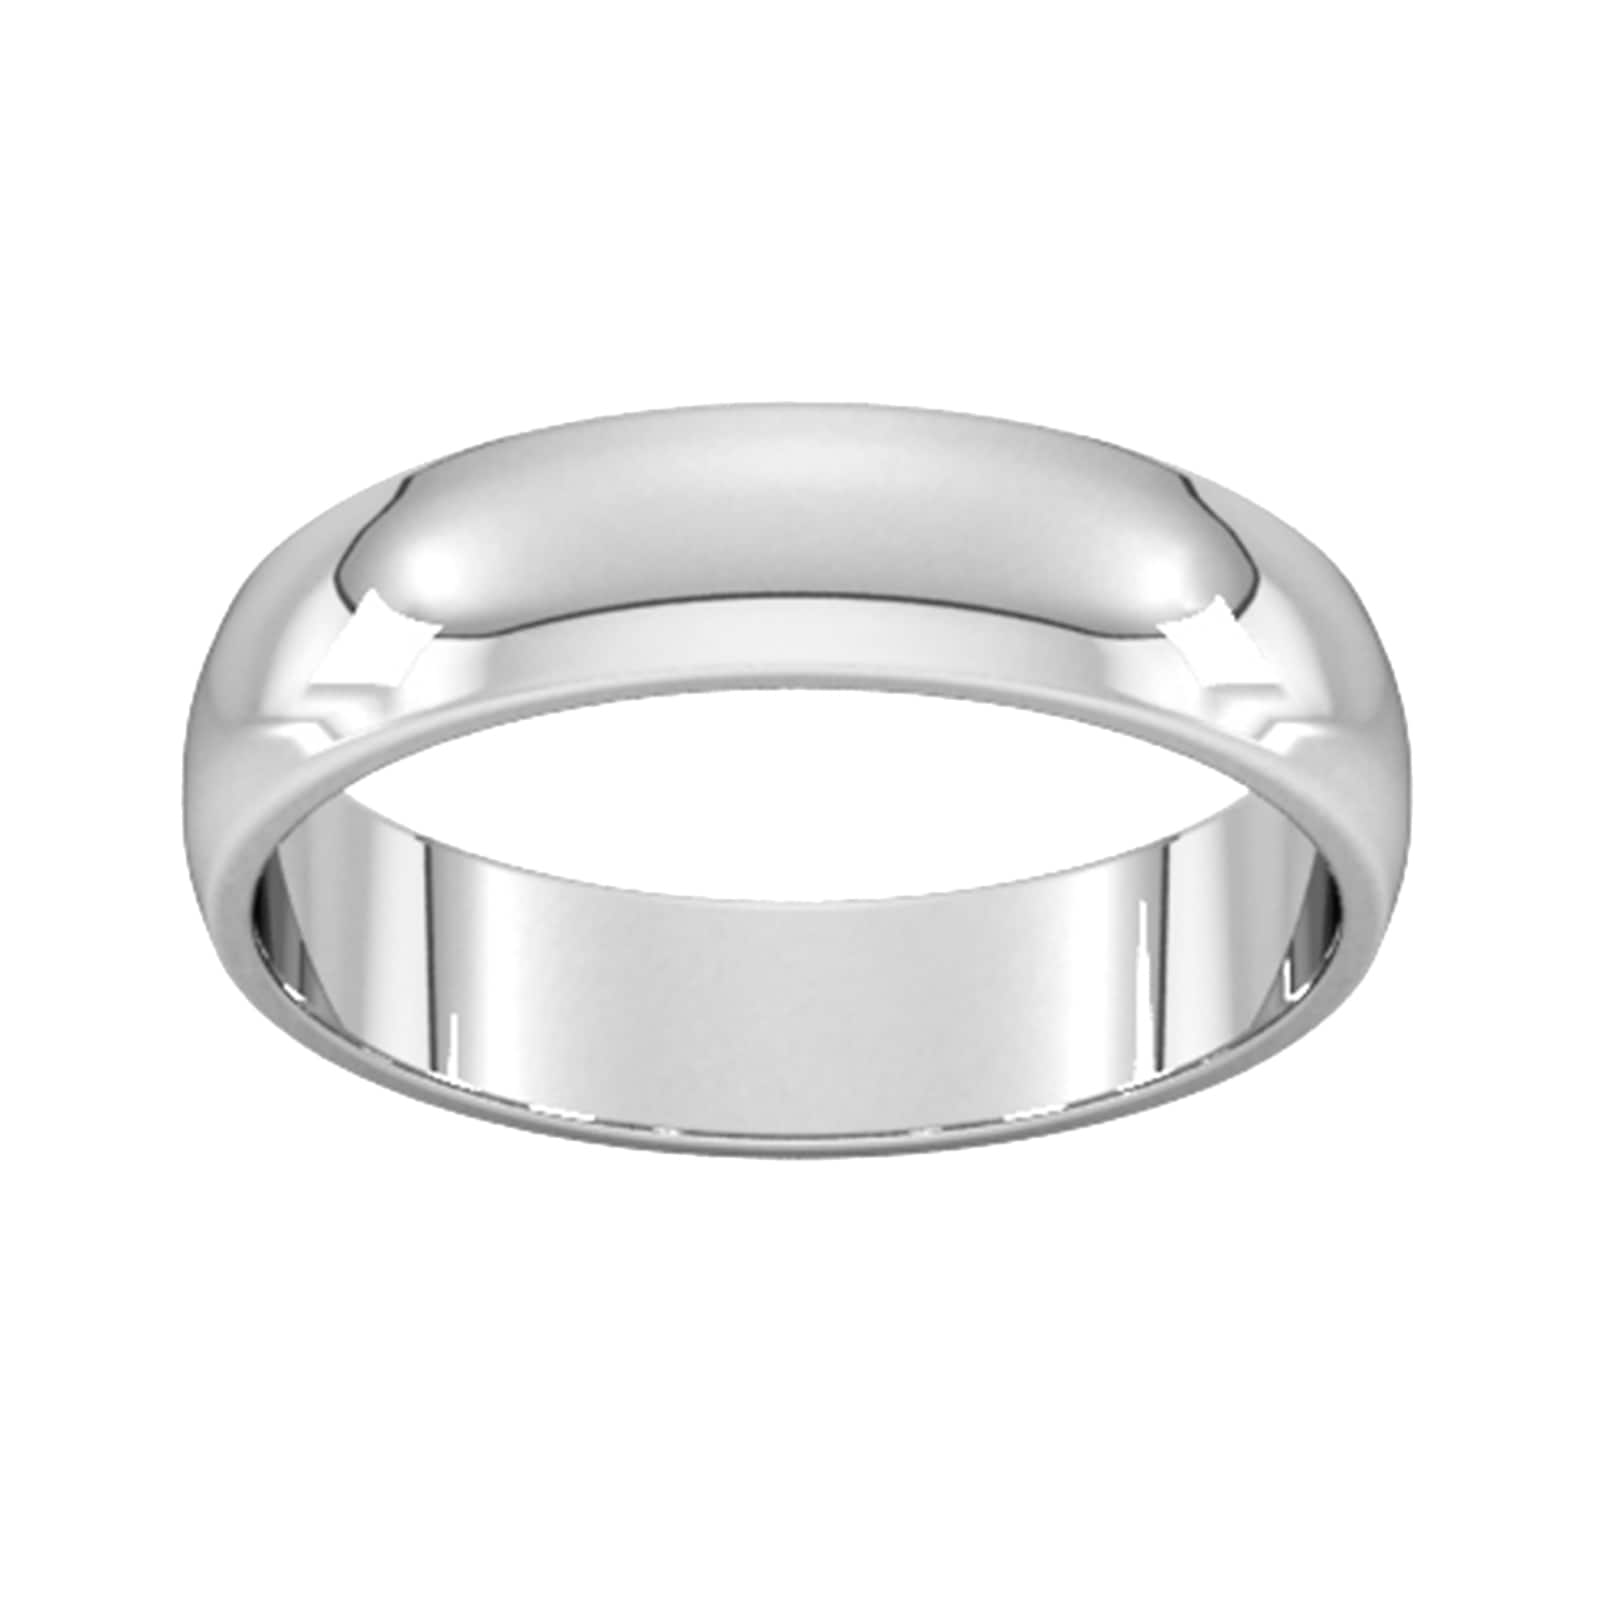 Women's Irish Claddagh Ring in 925 Sterling Silver